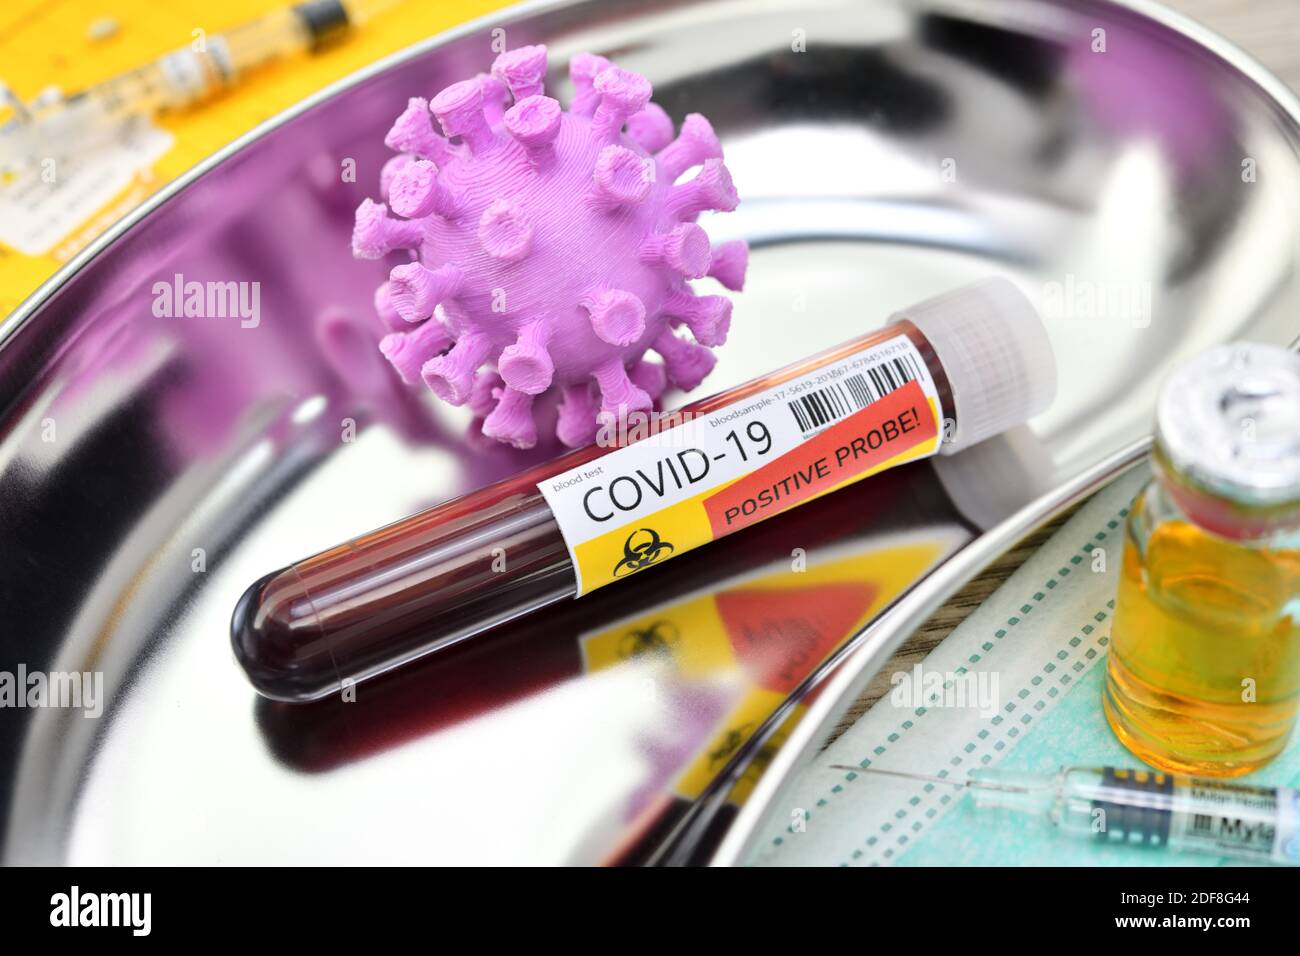 Covid Blood Sample And Coronavirus Model In A Kidney Dish, Covid Vaccination Stock Photo